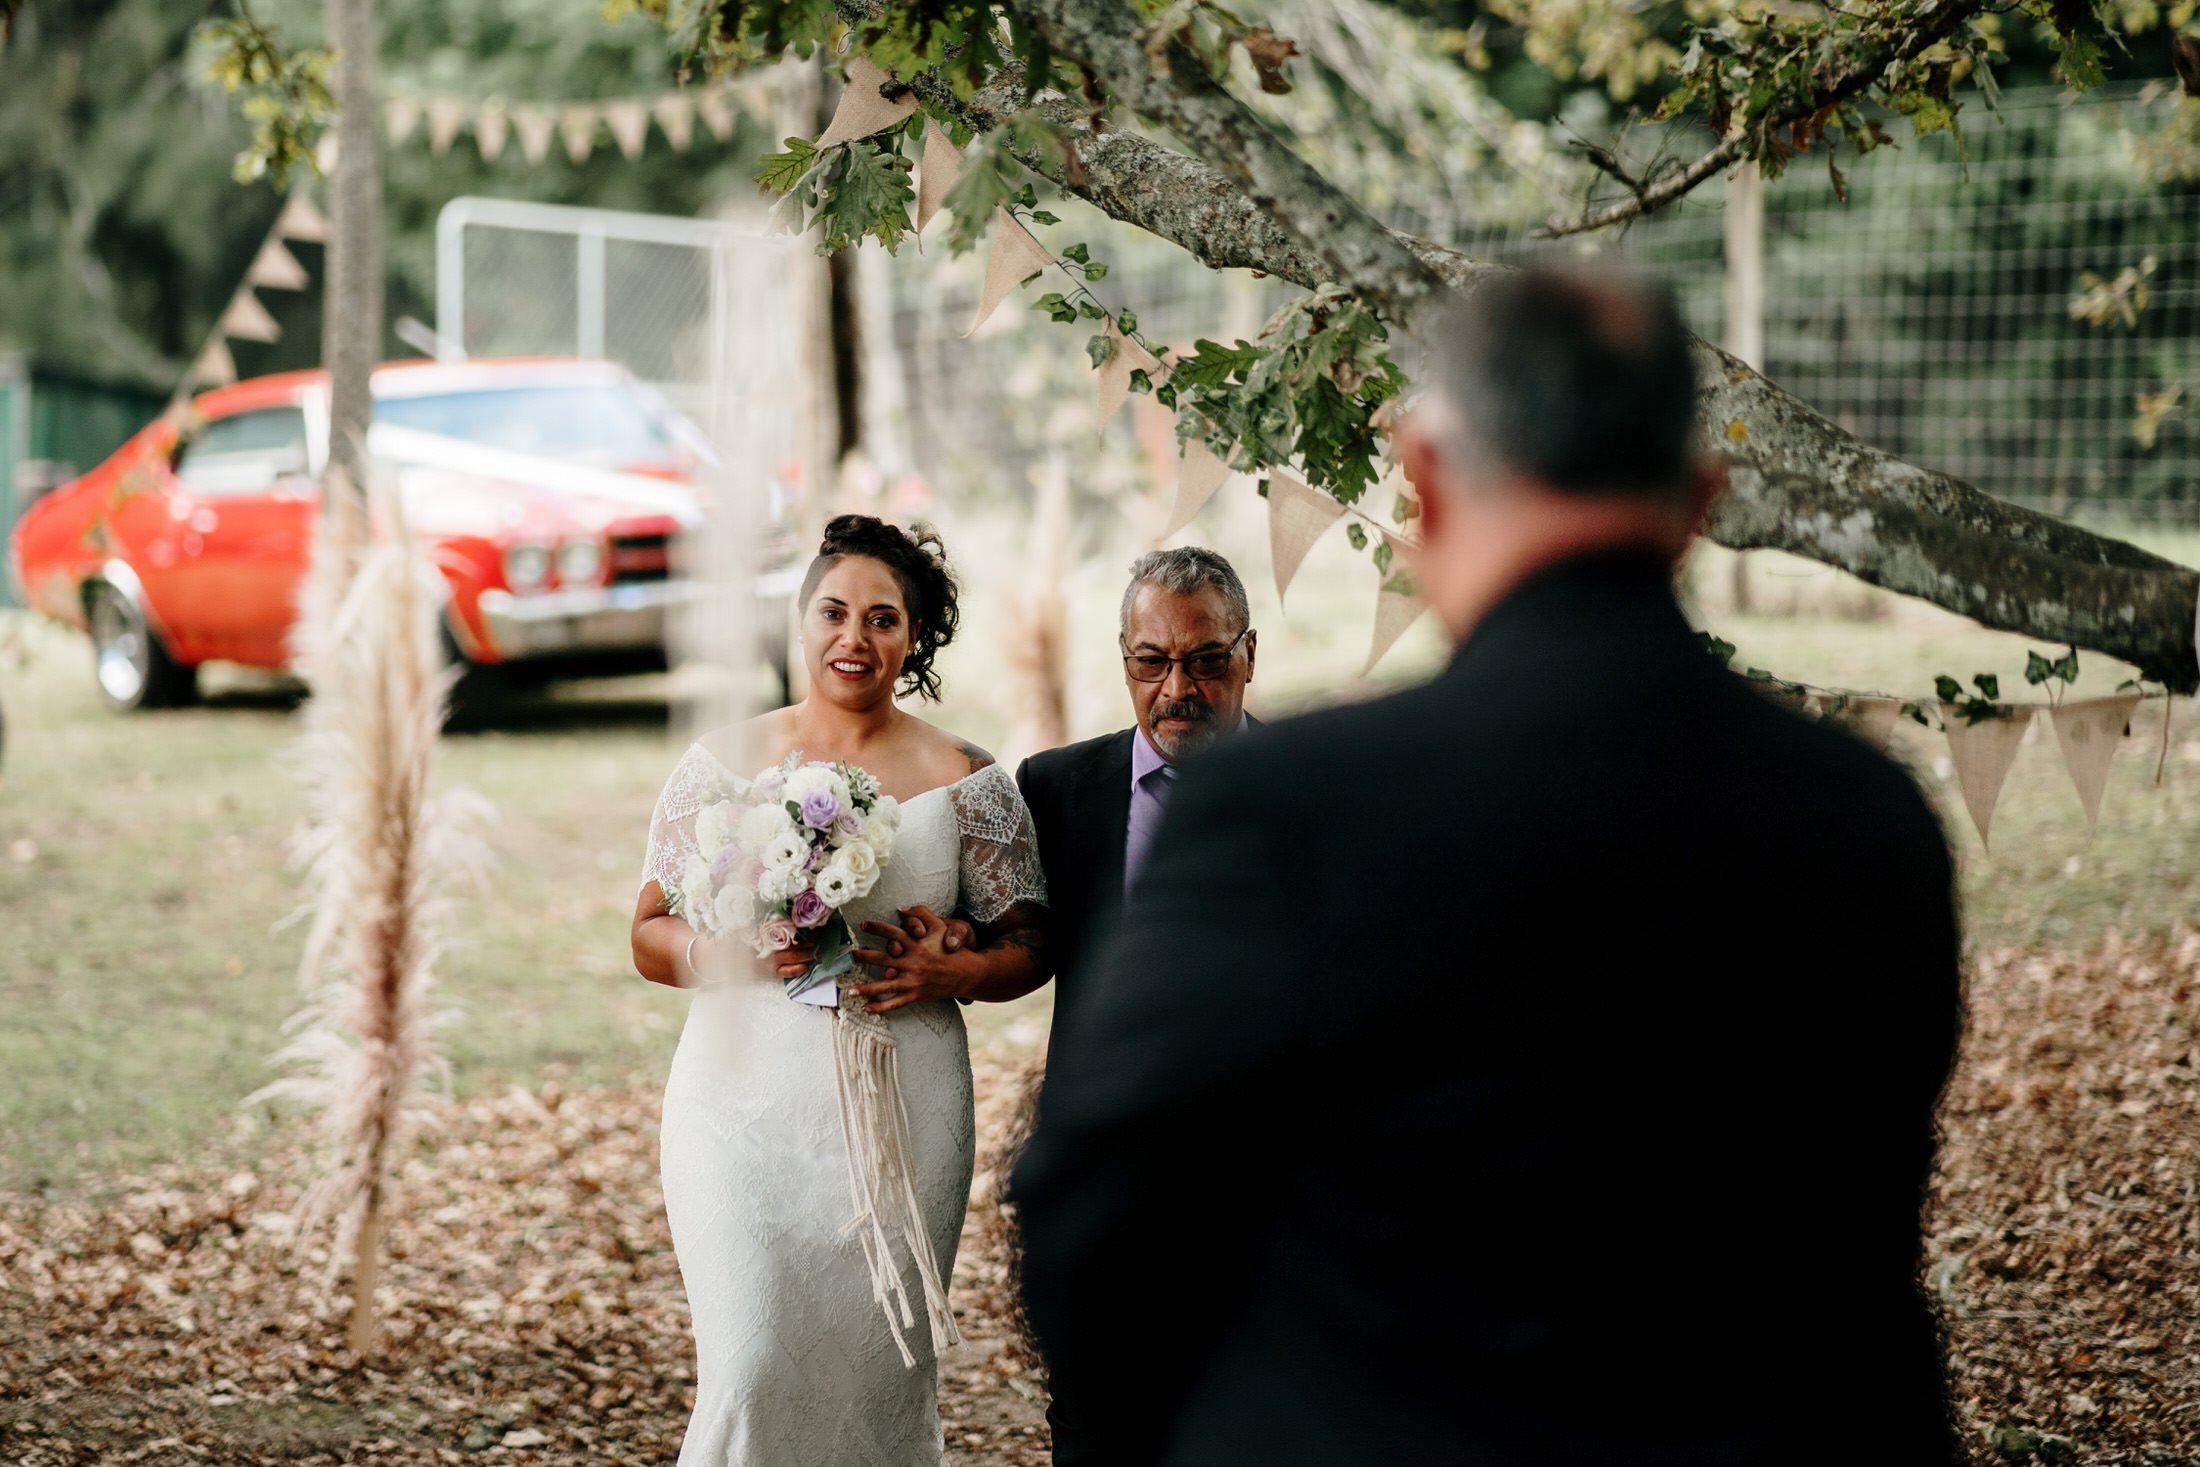  Auckland Wedding Photographer | Auckland Wedding Videographer | Same Sexy Wedding | The Red Shed Wedding Venue | DIY Wedding | Auckland Venue | Garden Wedding | Lesbian Wedding 